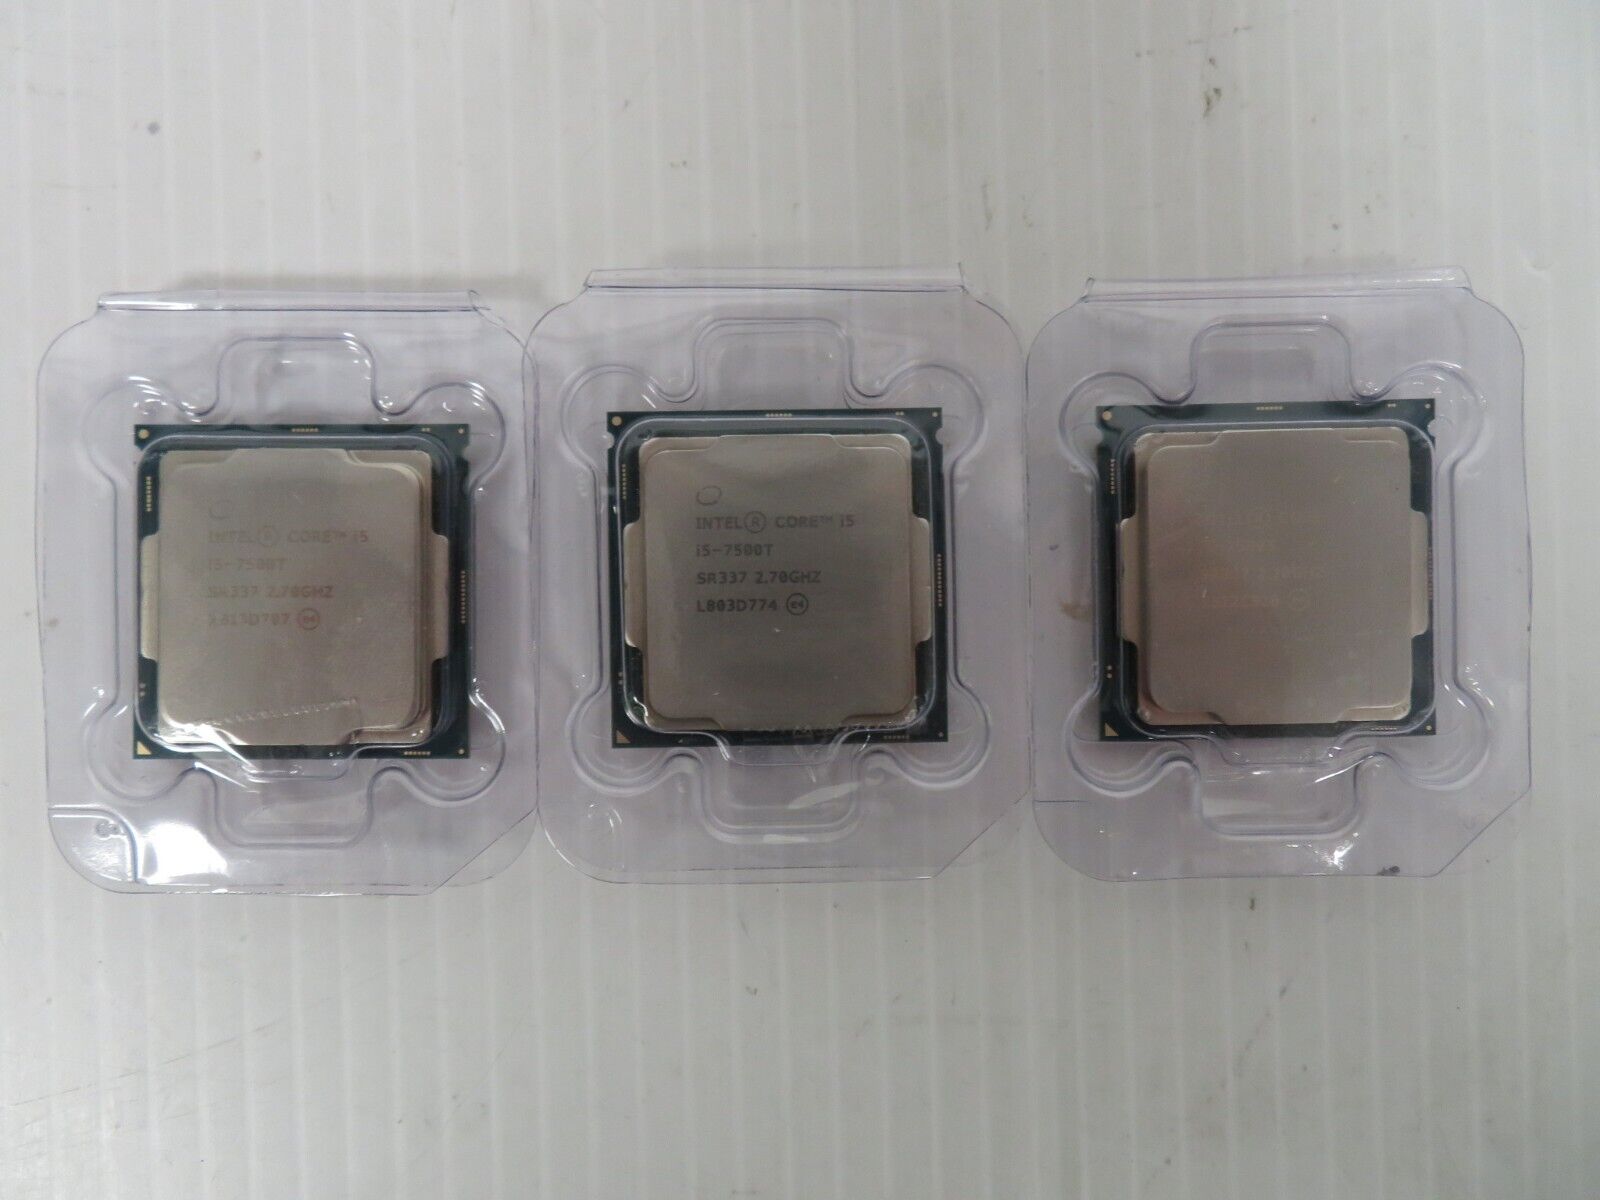 Lot of 3 Intel Core i5-7500T 2.7GHz CPU Processor - SR337